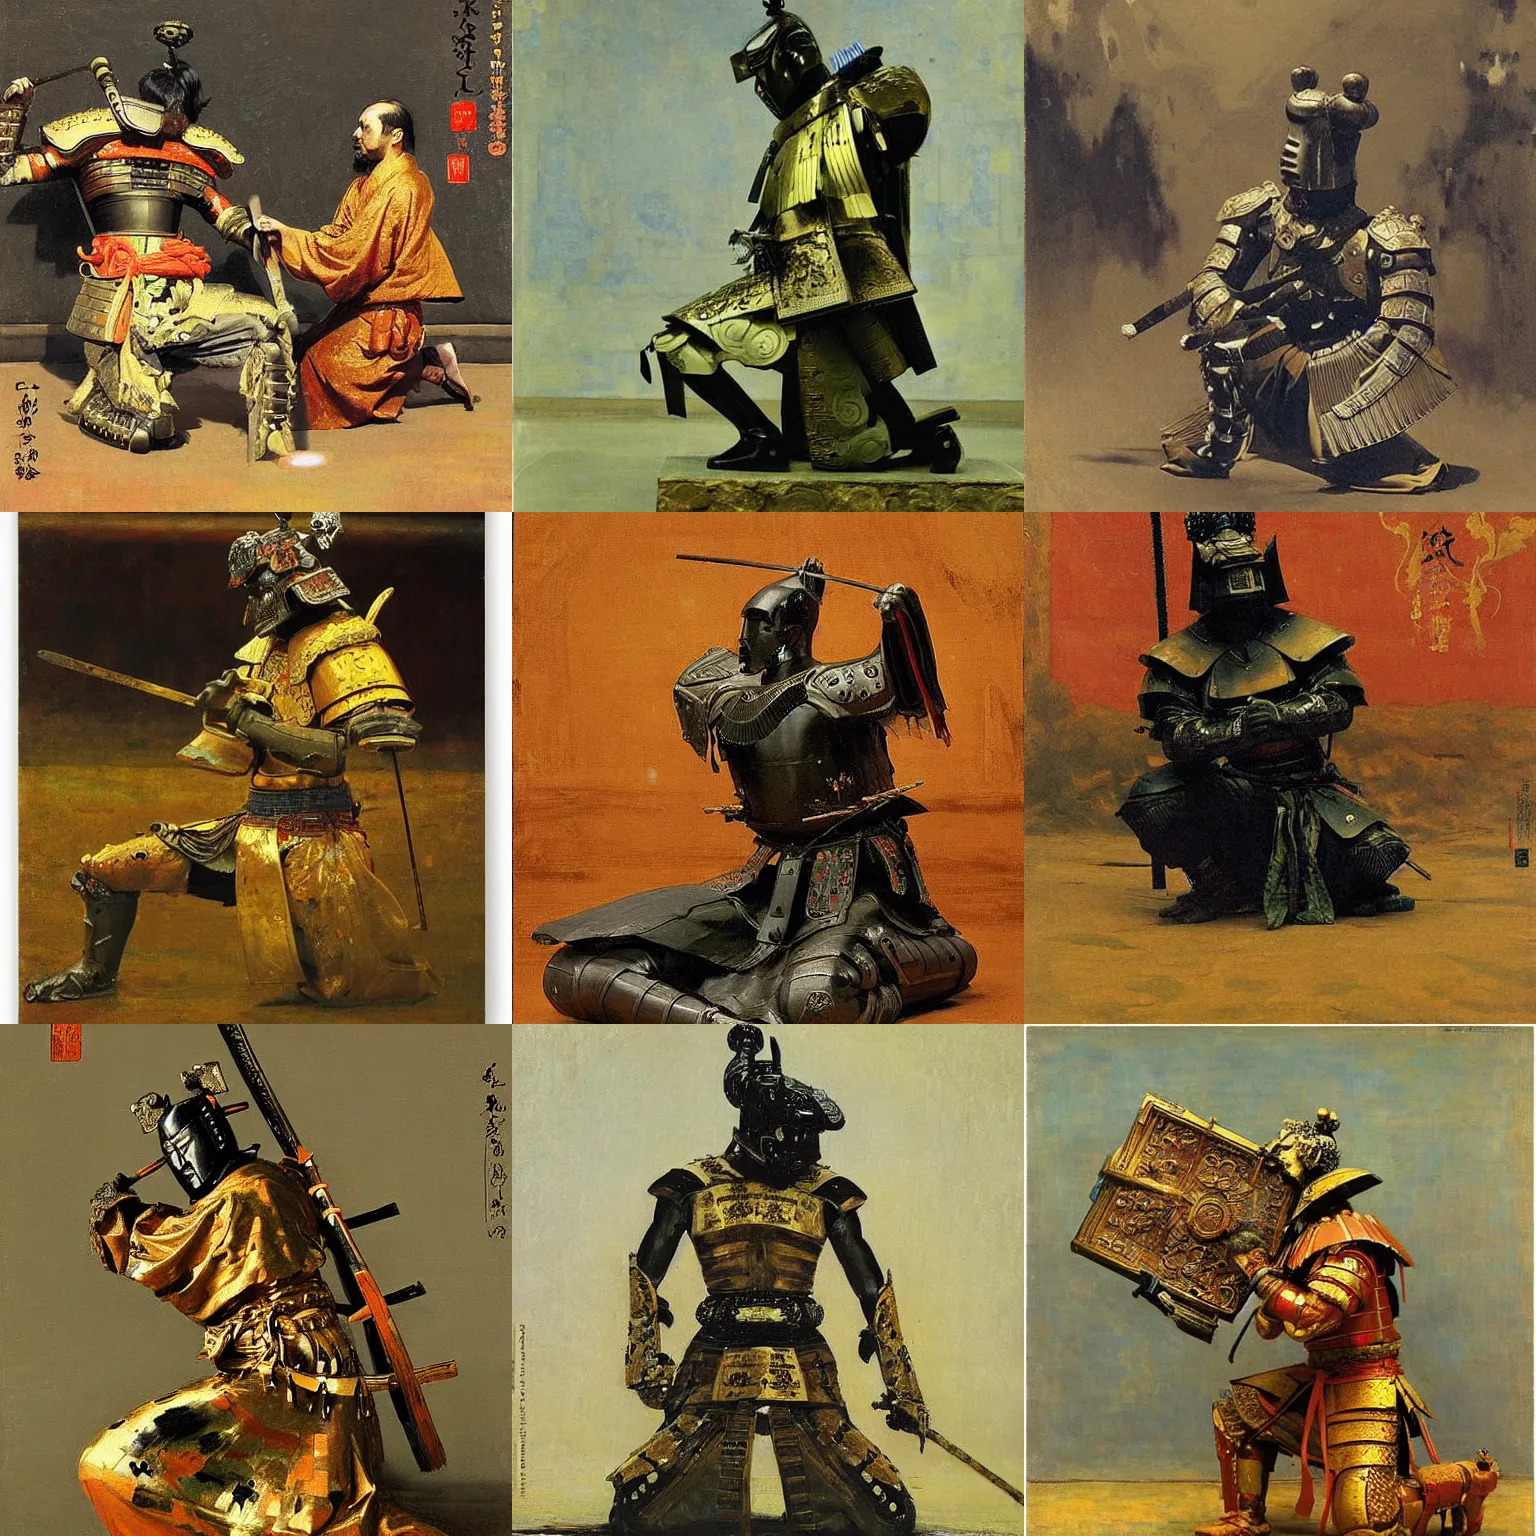 Prompt: depicting still photo of galactic behemoth ancient kneeling samurai by style ilya repin